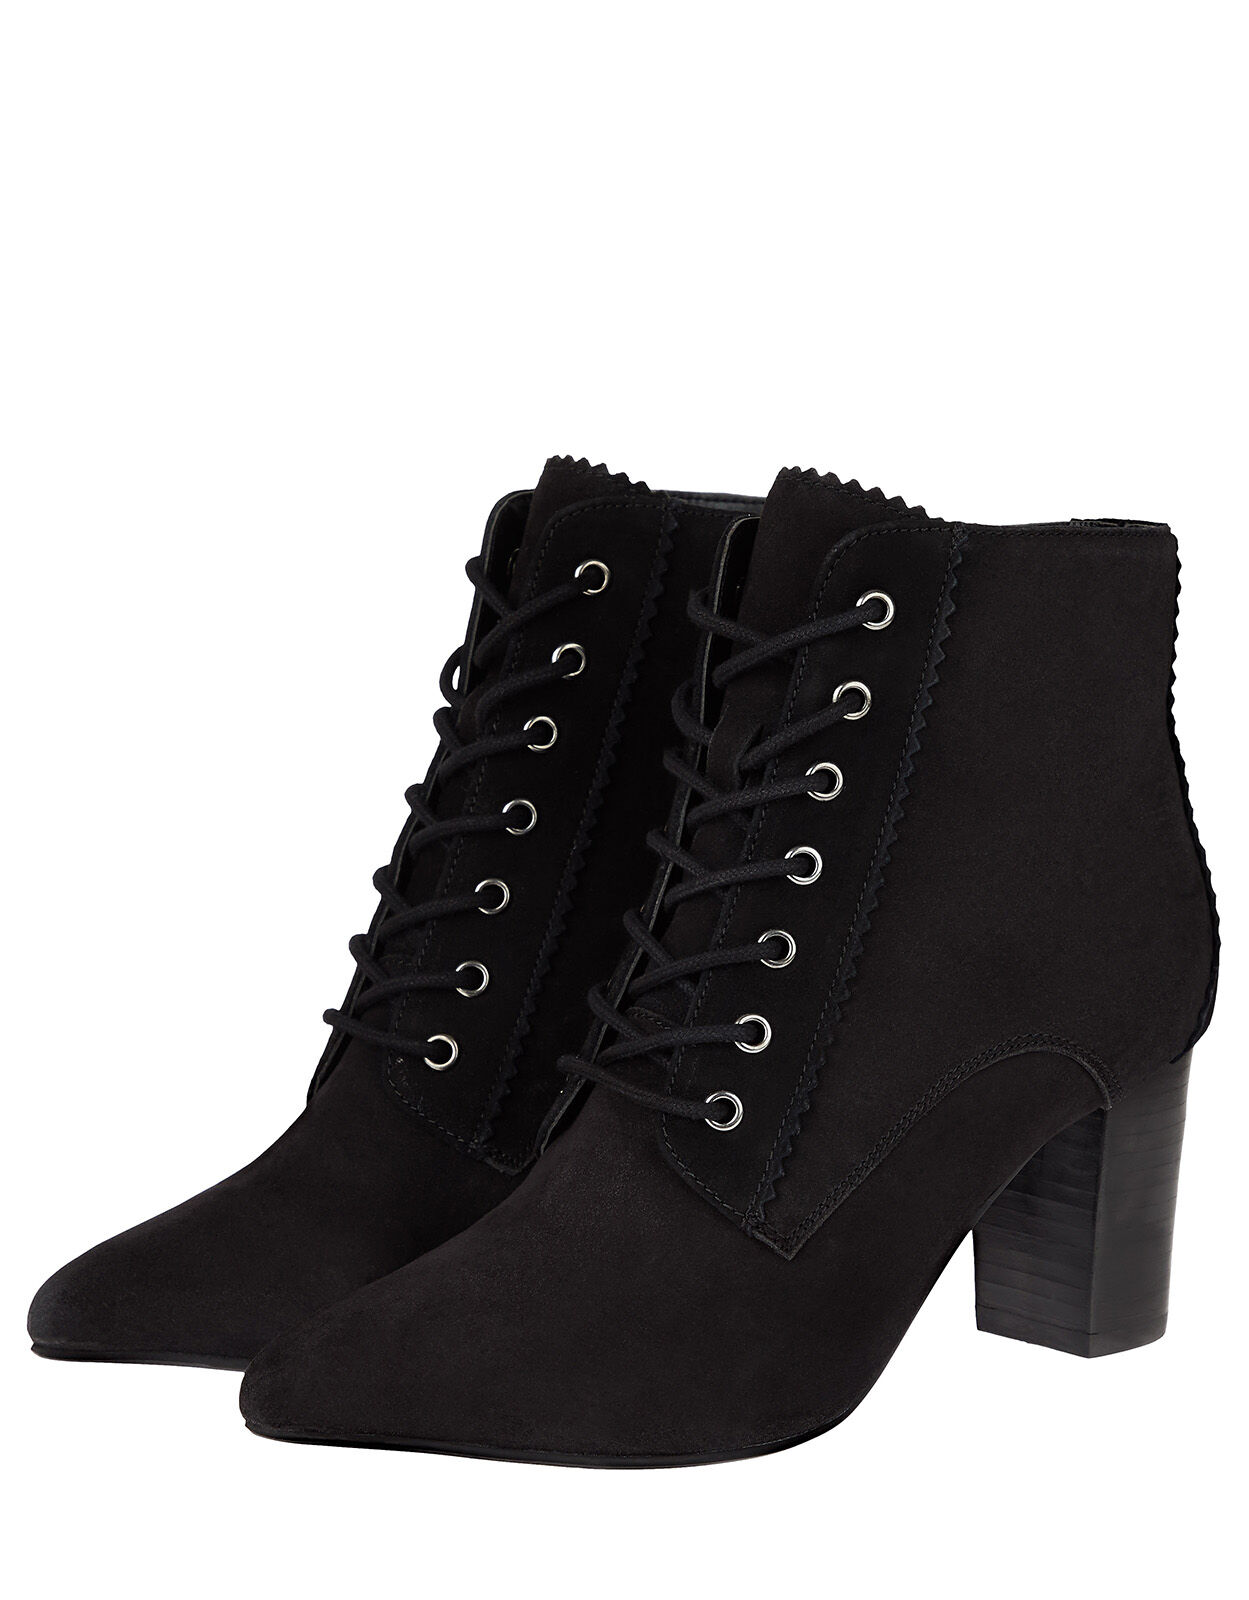 black heeled ankle boots uk